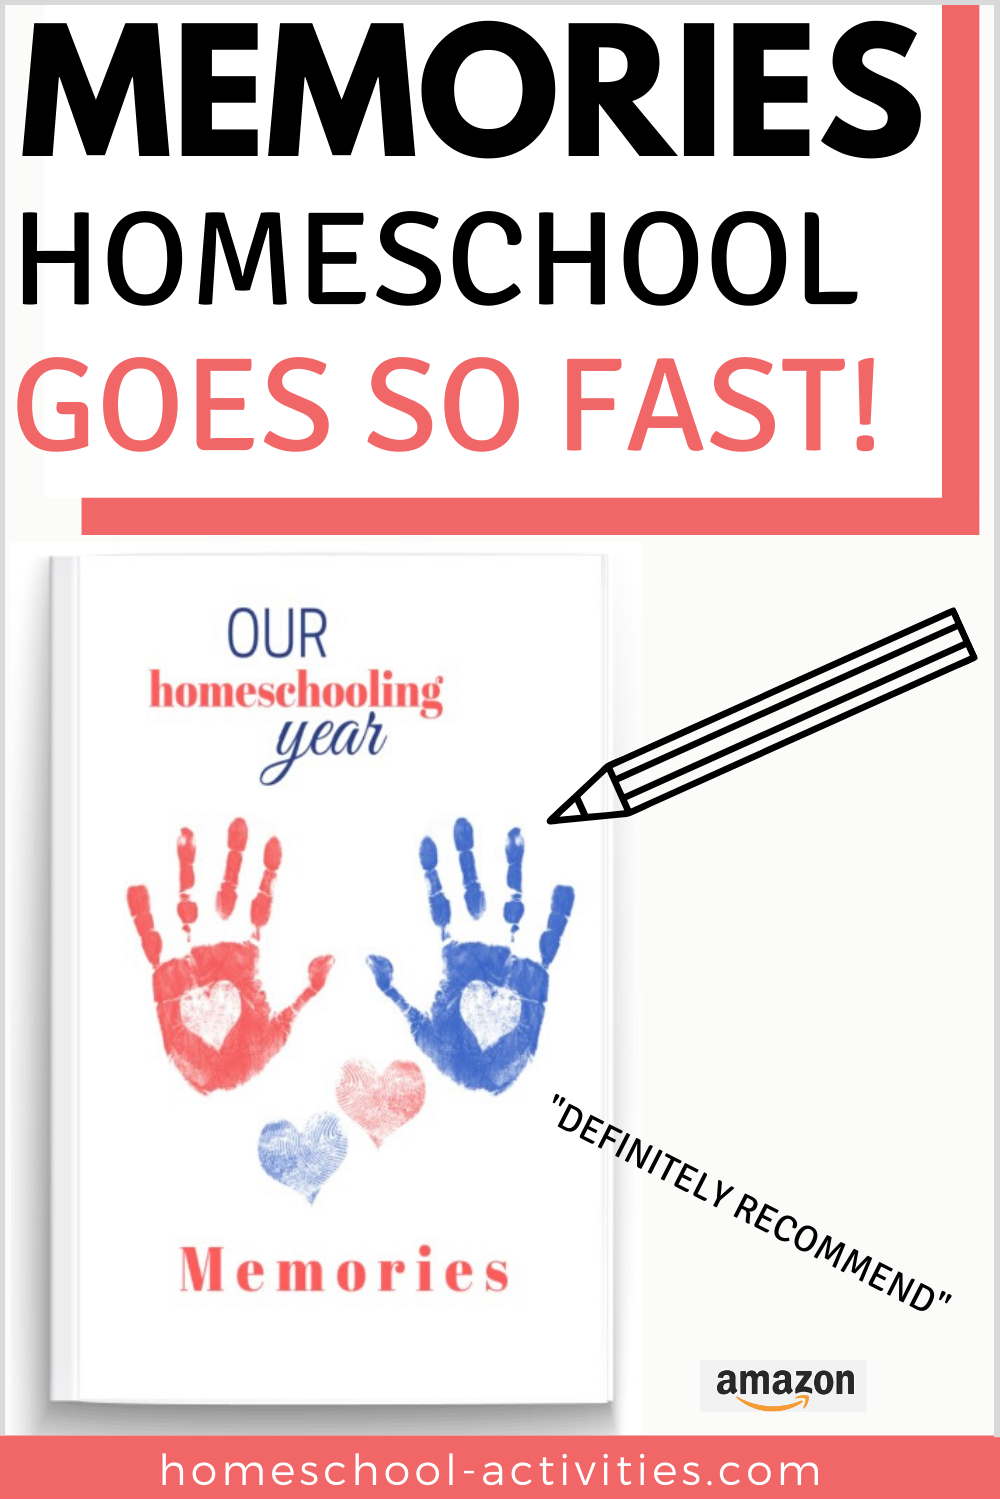 Homeschooling memory record book